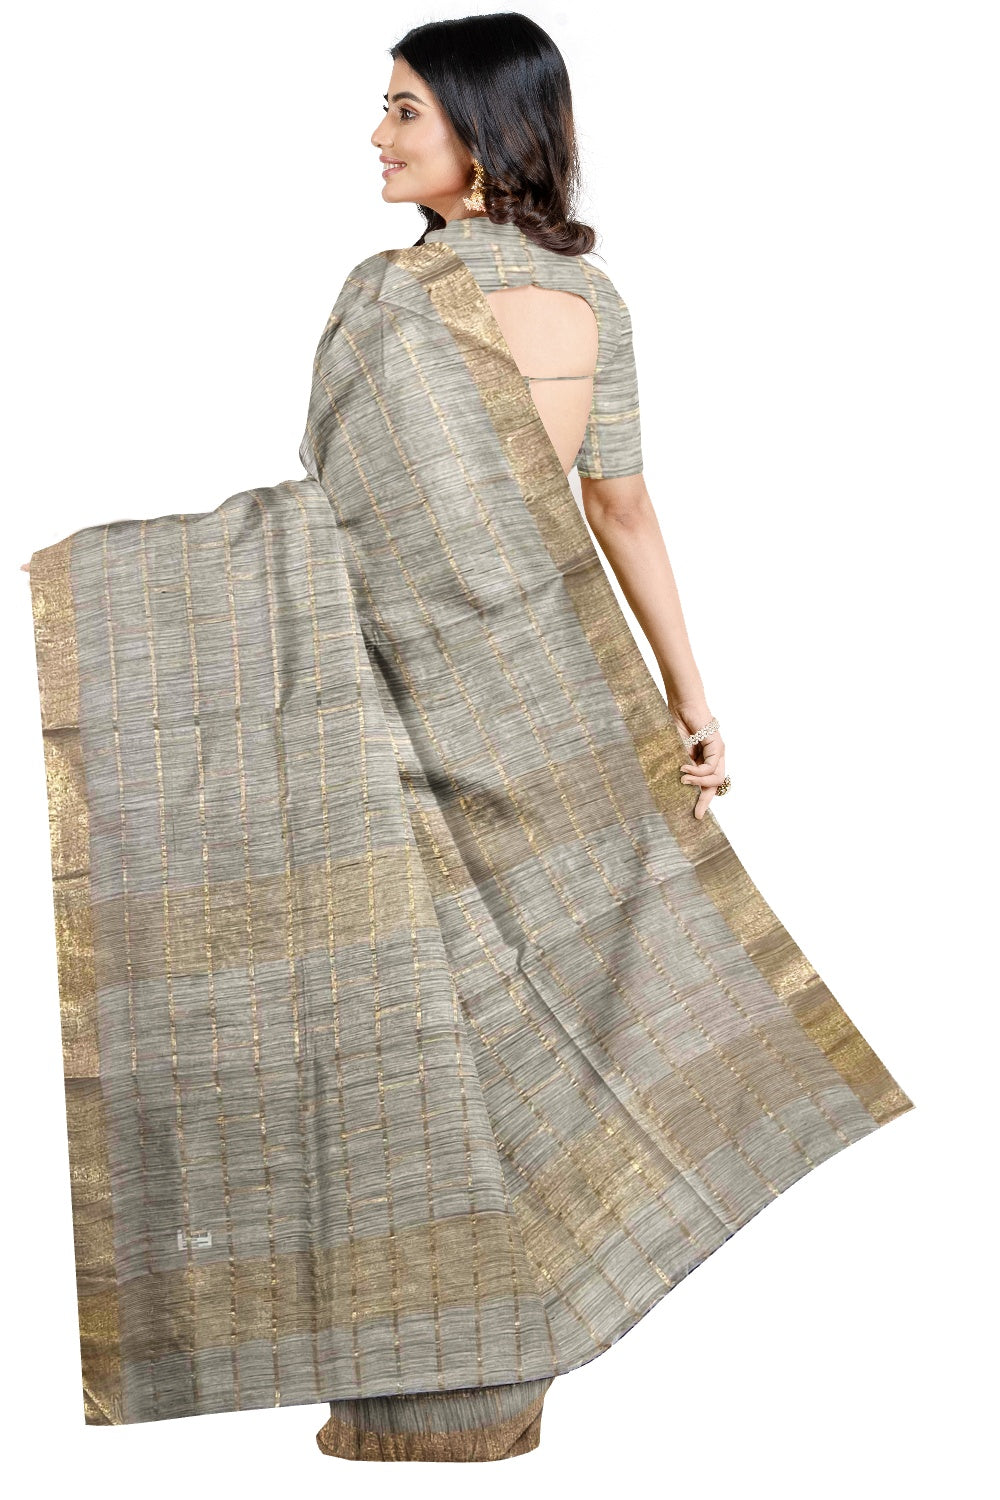 Southloom Cotton Light Brown Zari Stripes Designer Saree